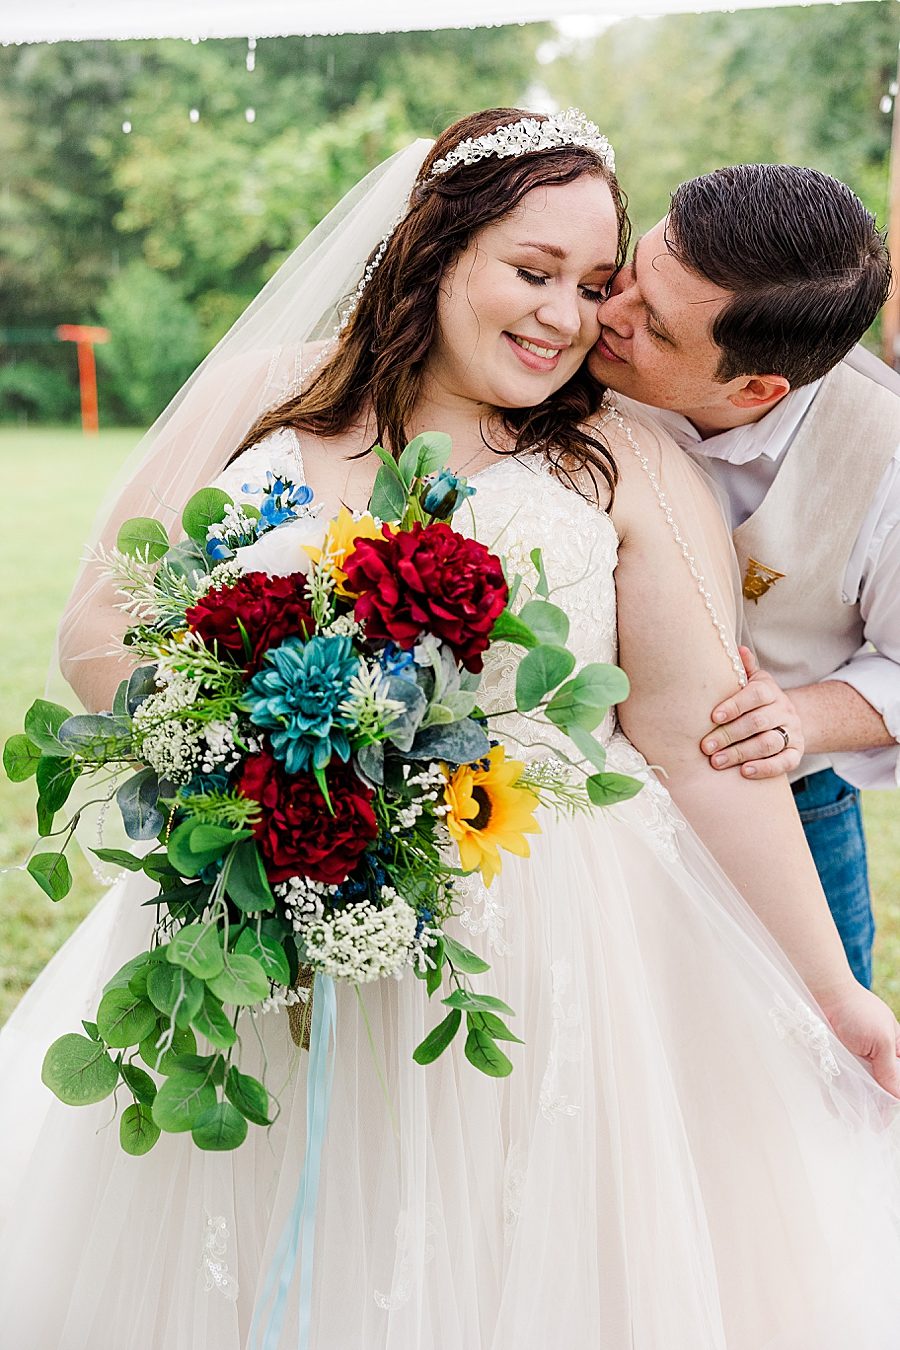 beautiful bouquet at this backyard wedding